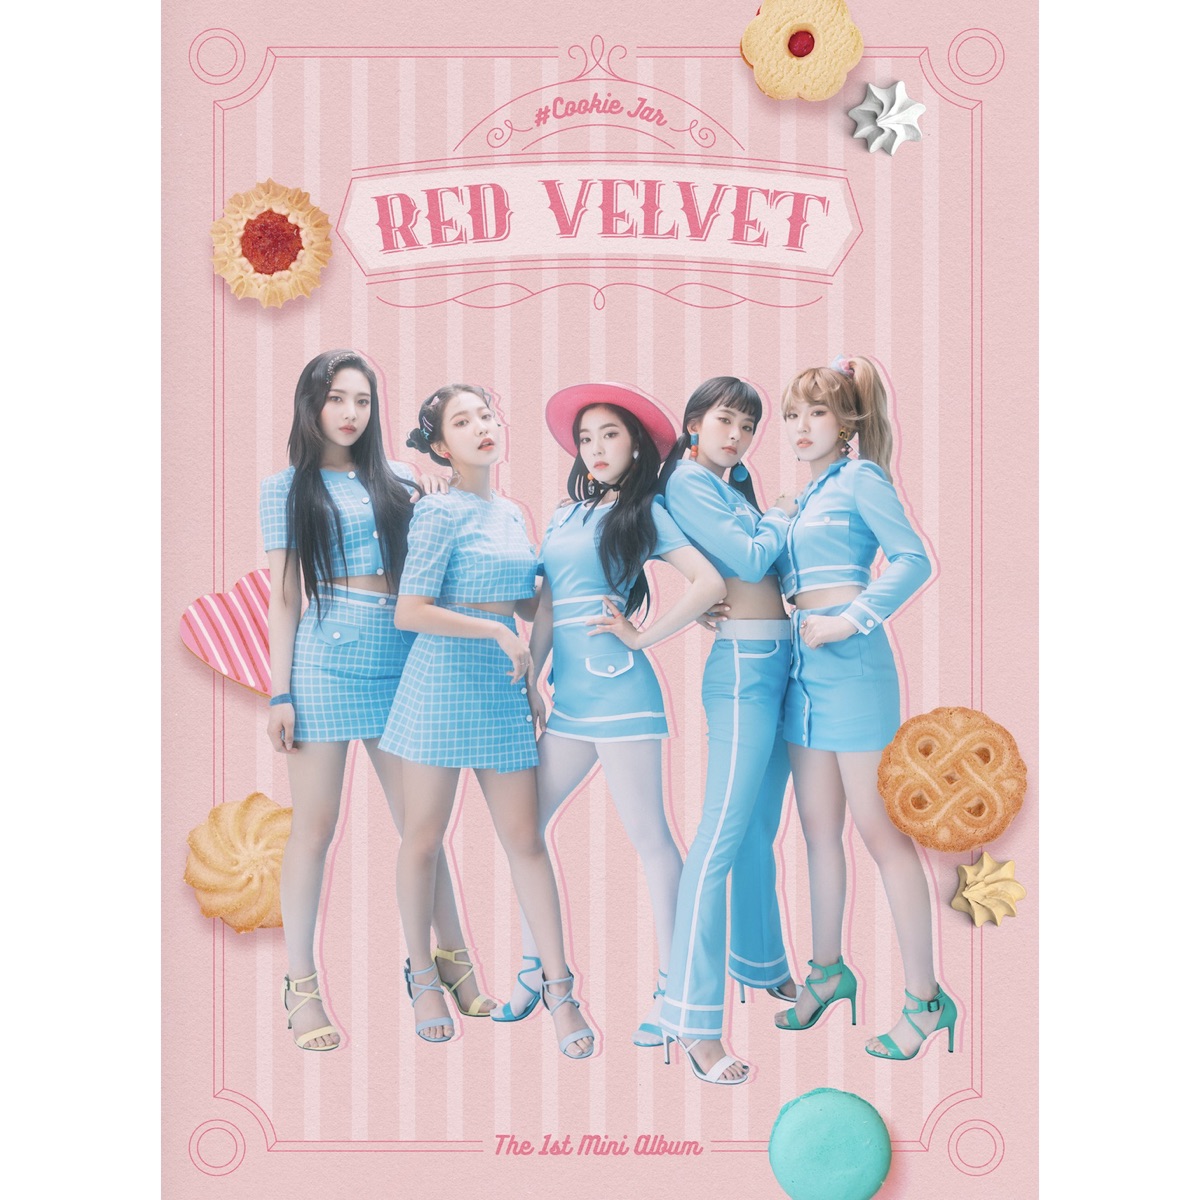 Red Velvet – #Cookie Jar – Single -Japanese Ver.-